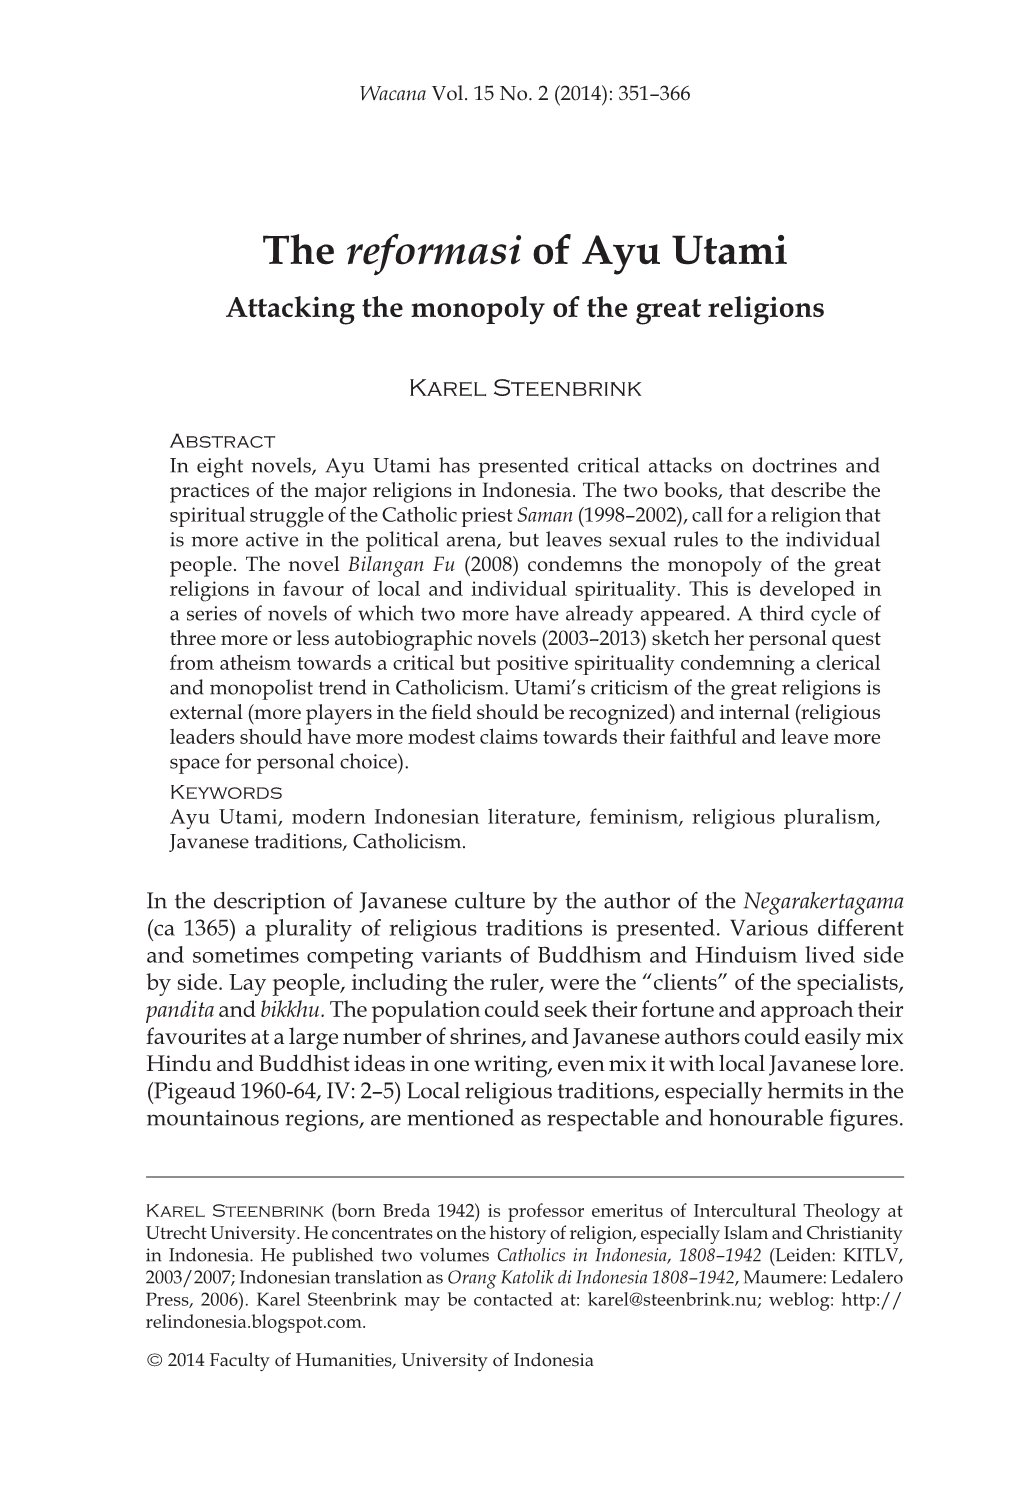 The Reformasi of Ayu Utami